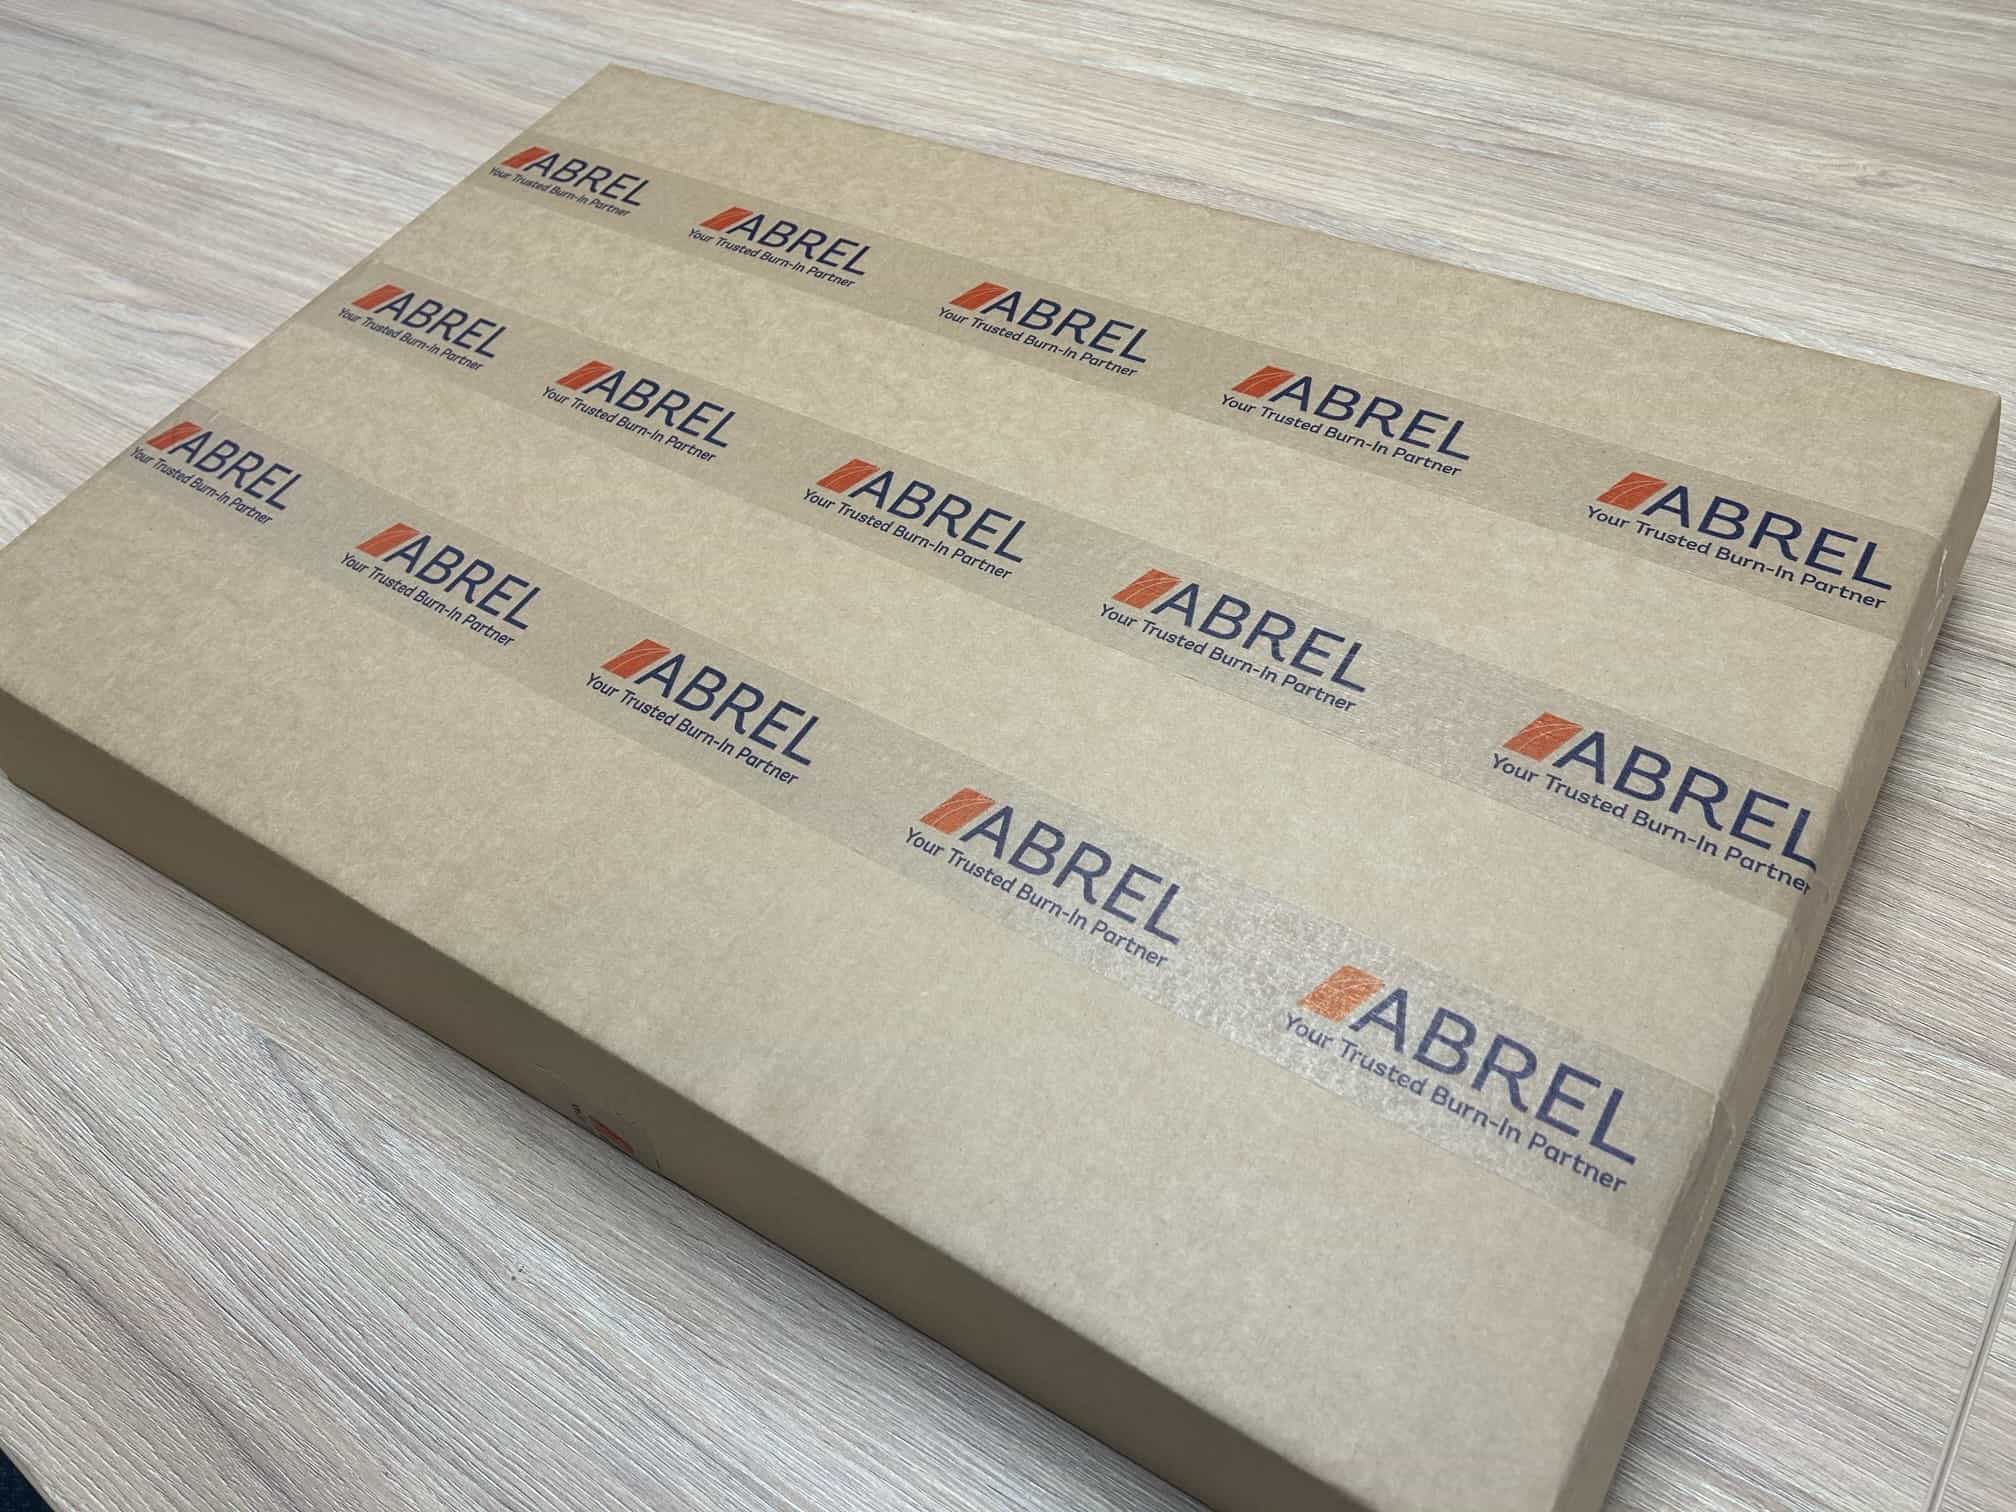 New Abrel branding on a cardboard box